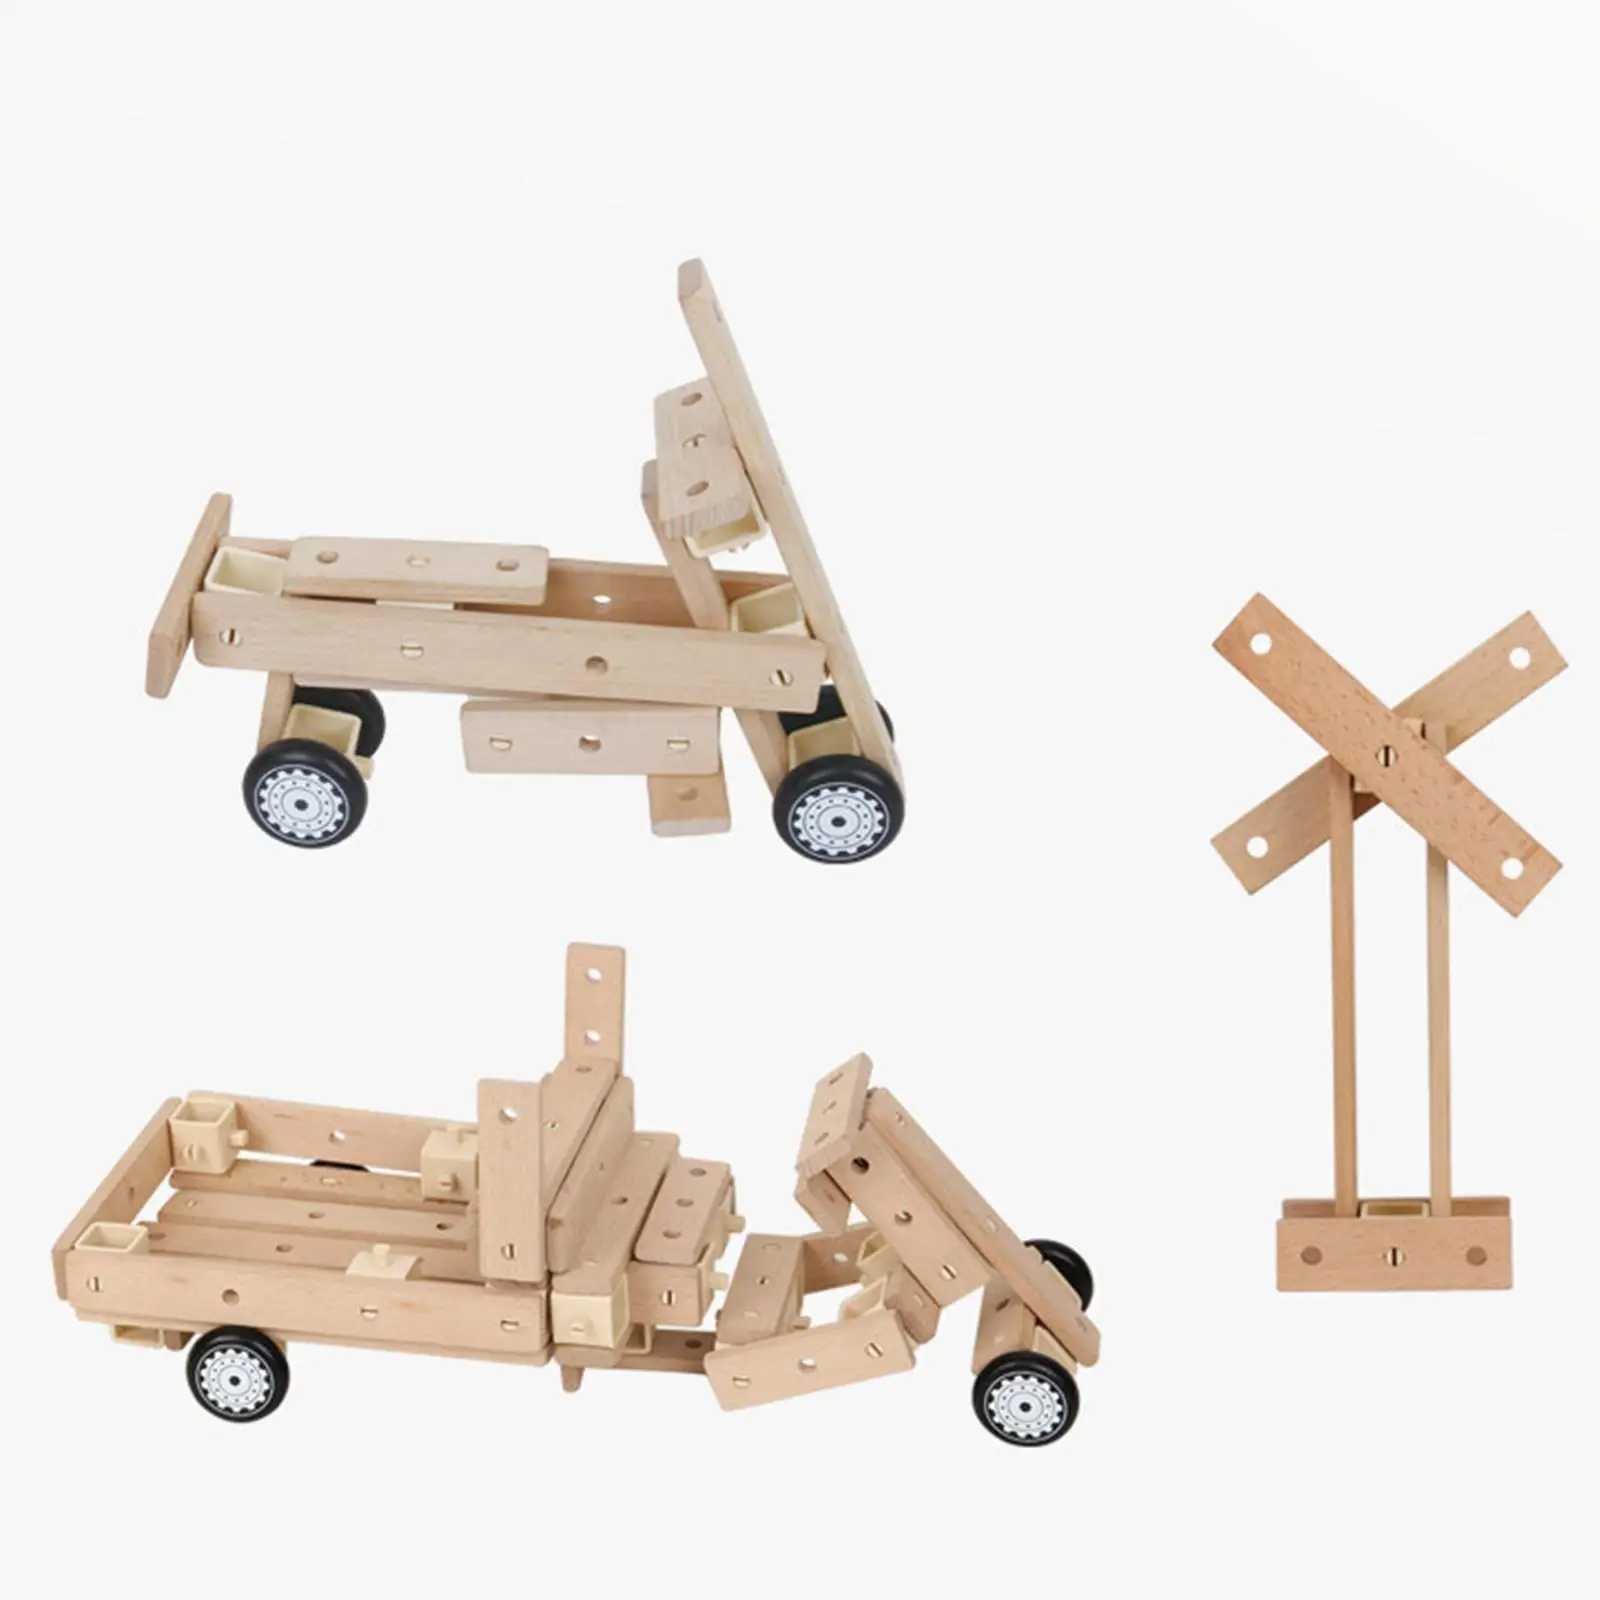 Wooden Building Blocks Set Wood Planks Set Stem Learning DIY Screws Nuts Wooden Building Kit for Kid Preschool Boys Girls Child